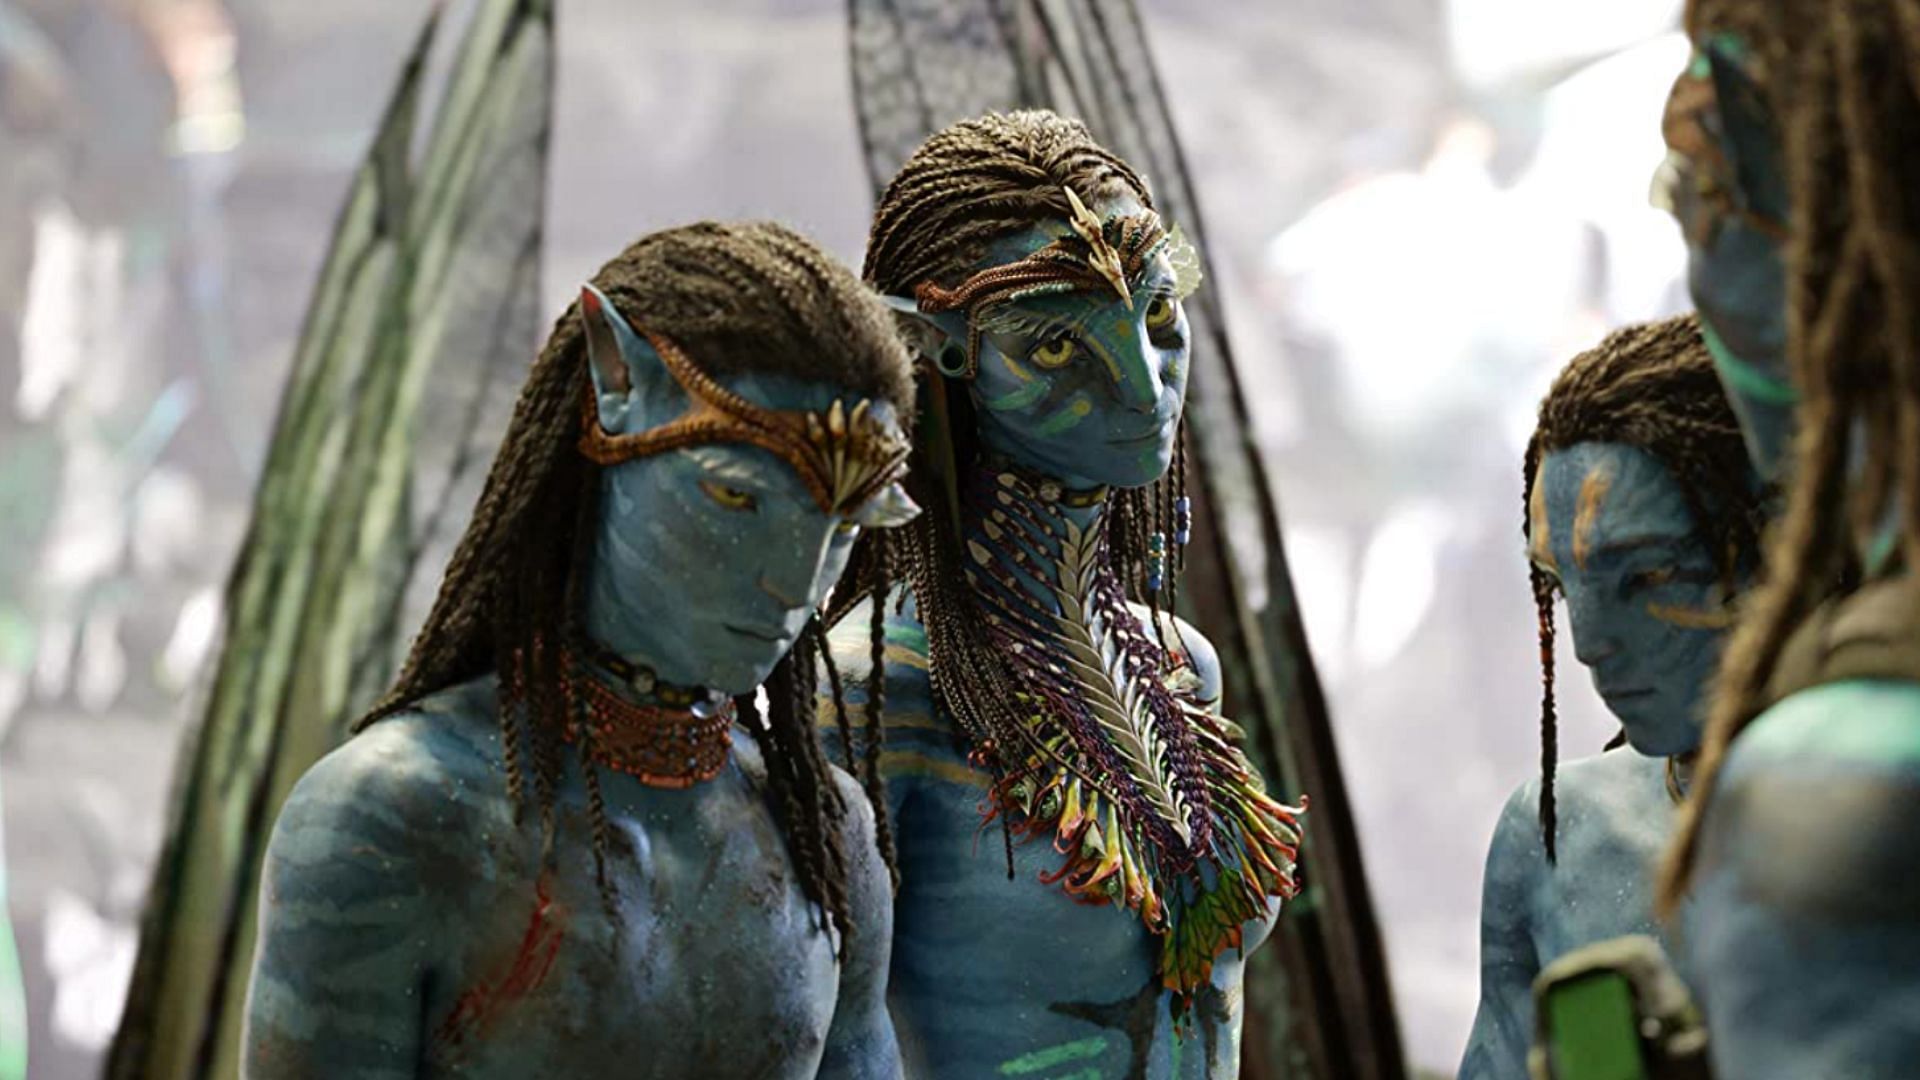 Zoe Saldana, Britain Dalton, and Jamie Flatters in Avatar: The Way of Water (Image via IMDb)